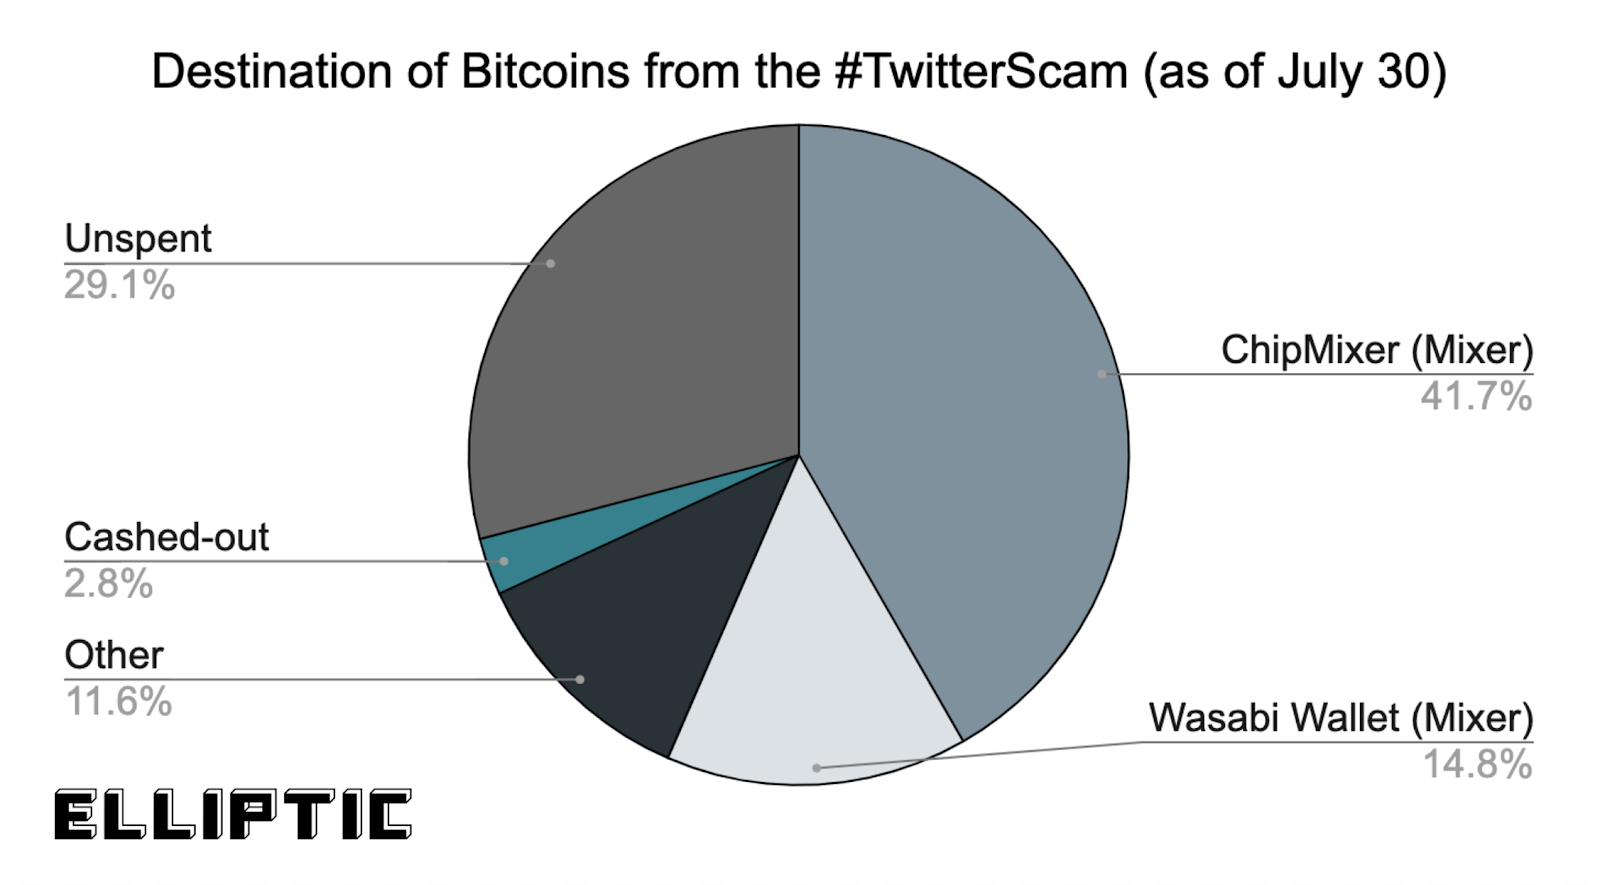 Elliptic: взломавшие Twitter хакеры пропустили половину биткоинов через два миксера